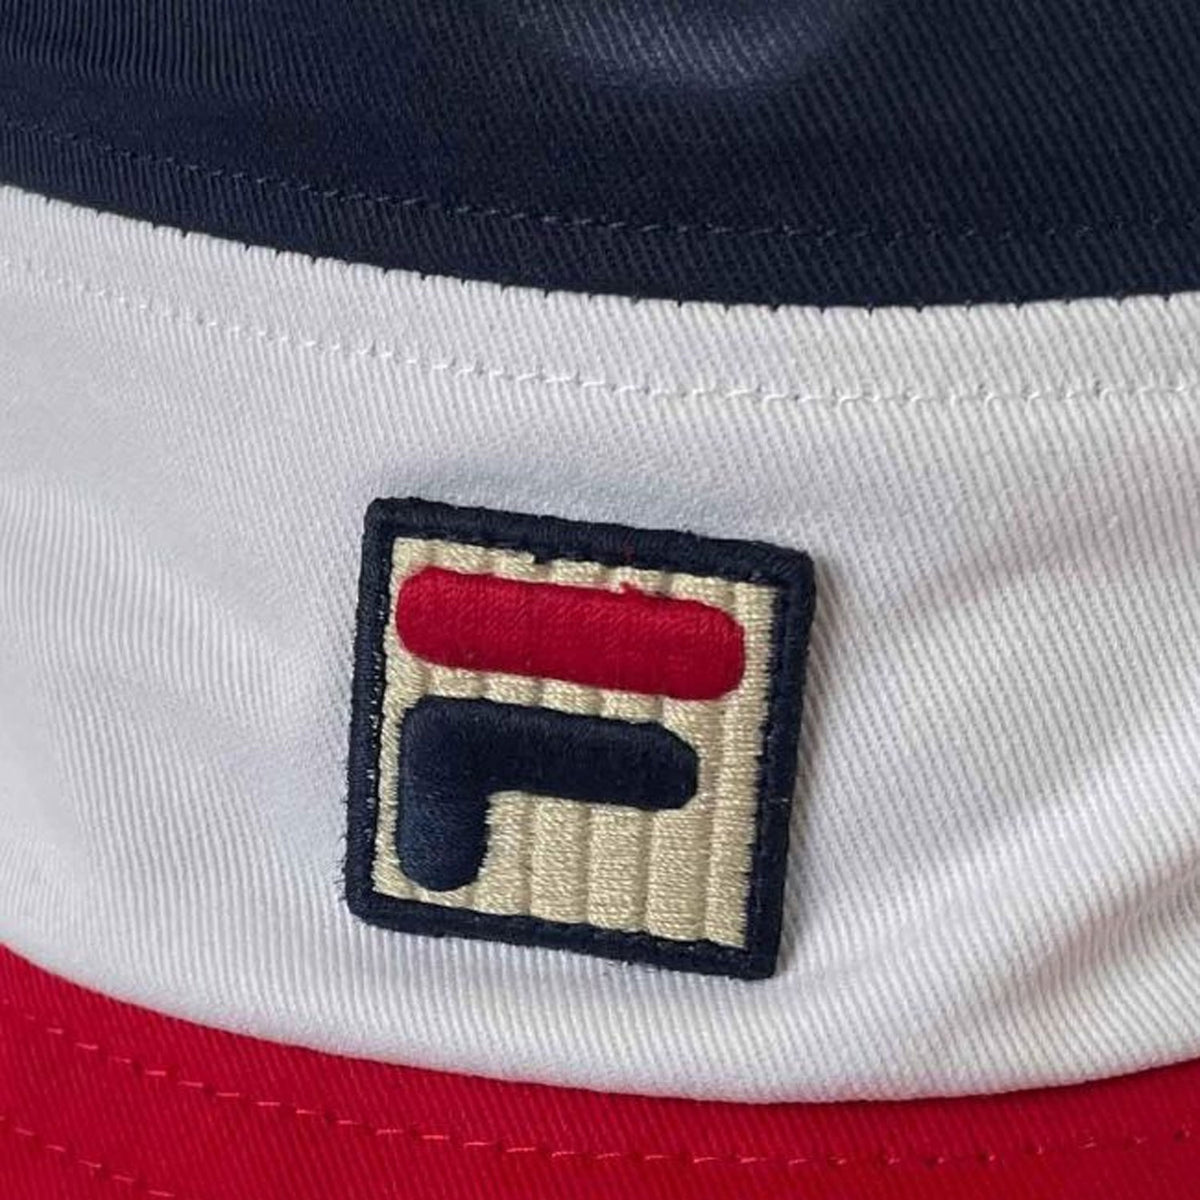 FILA Mens Retro Marco Tri Colour Bucket Hat With Heritage Logo